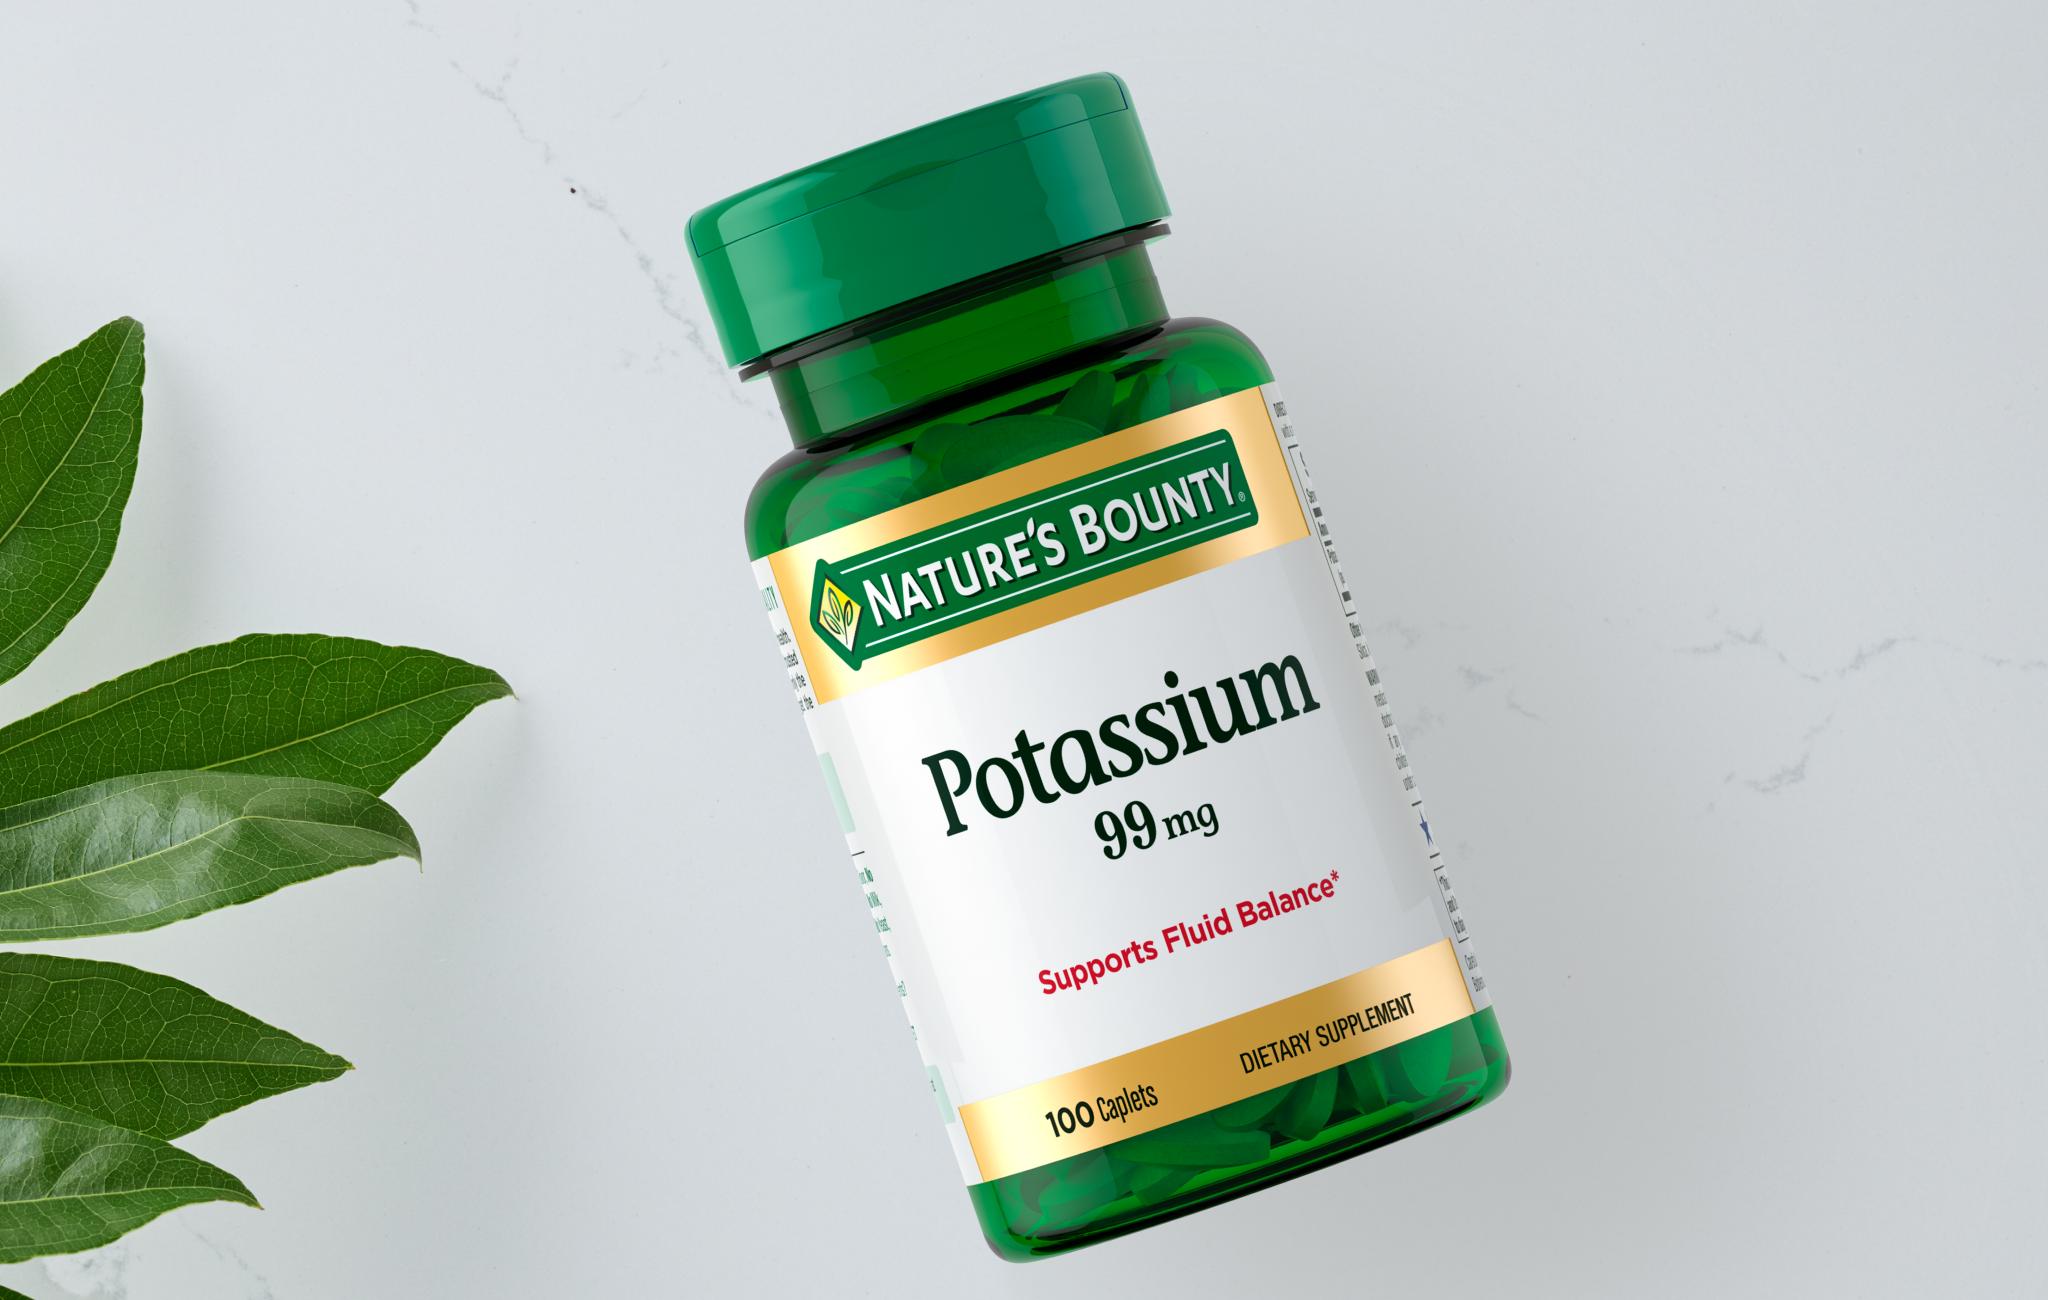 Potassium Gluconate – Nature's Bounty